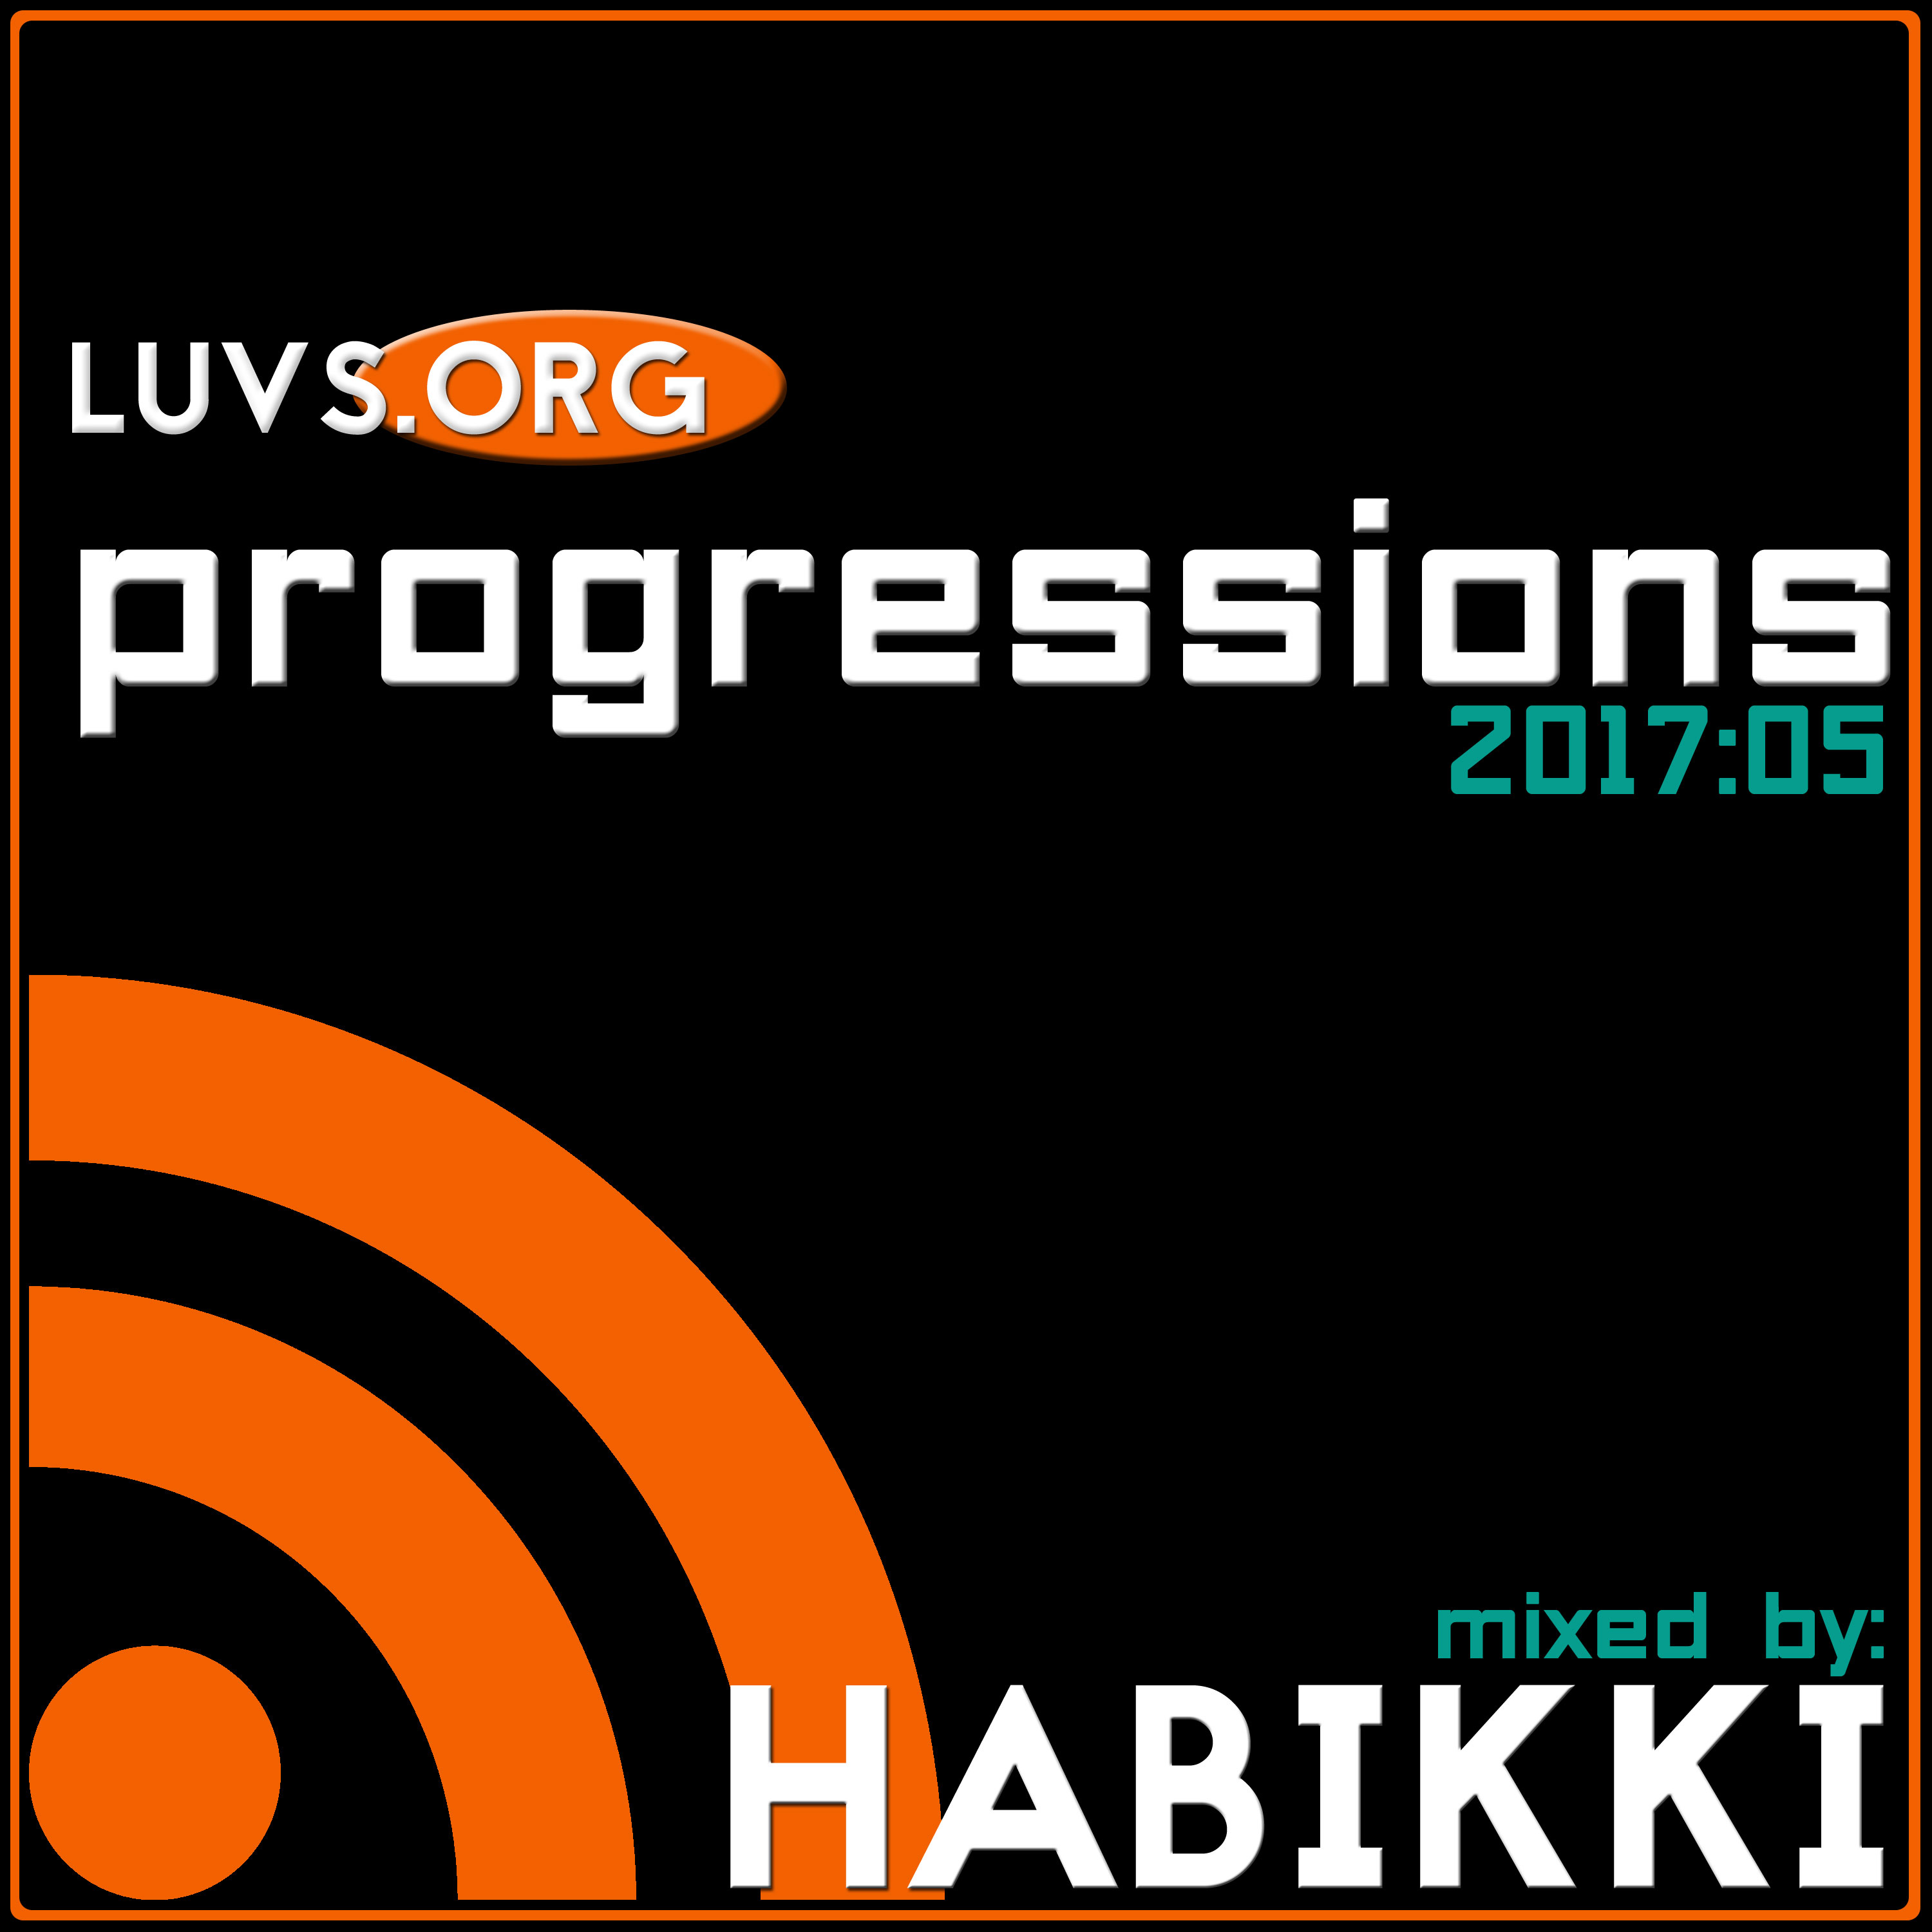 Luvs.org Sessions: [2017:05] Progressions